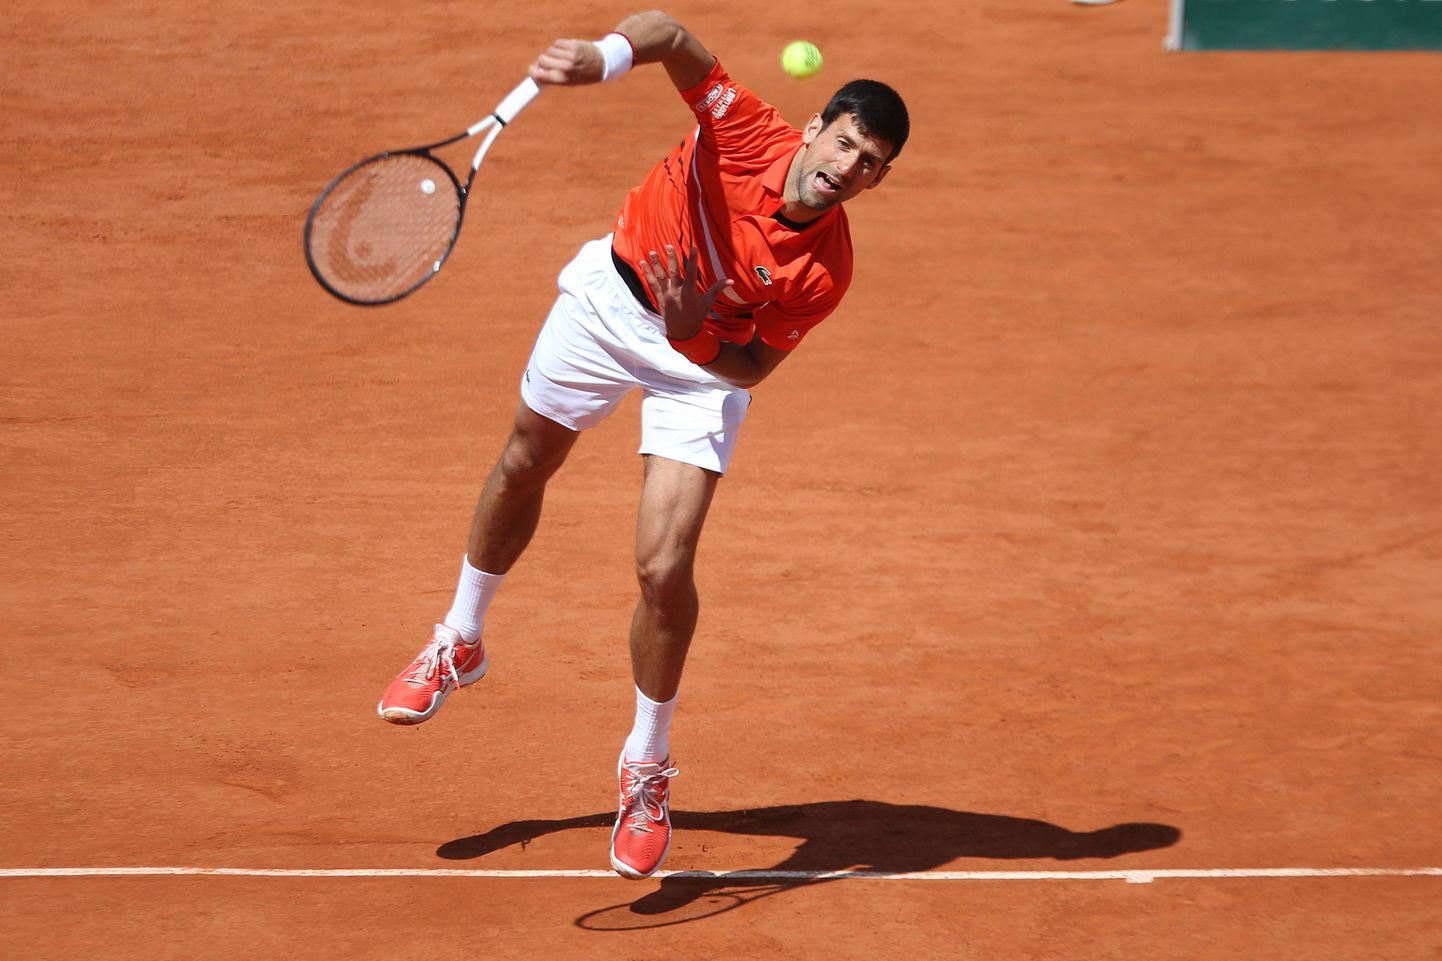 Maailma tennise edetabeljuht Novak Djokovic.